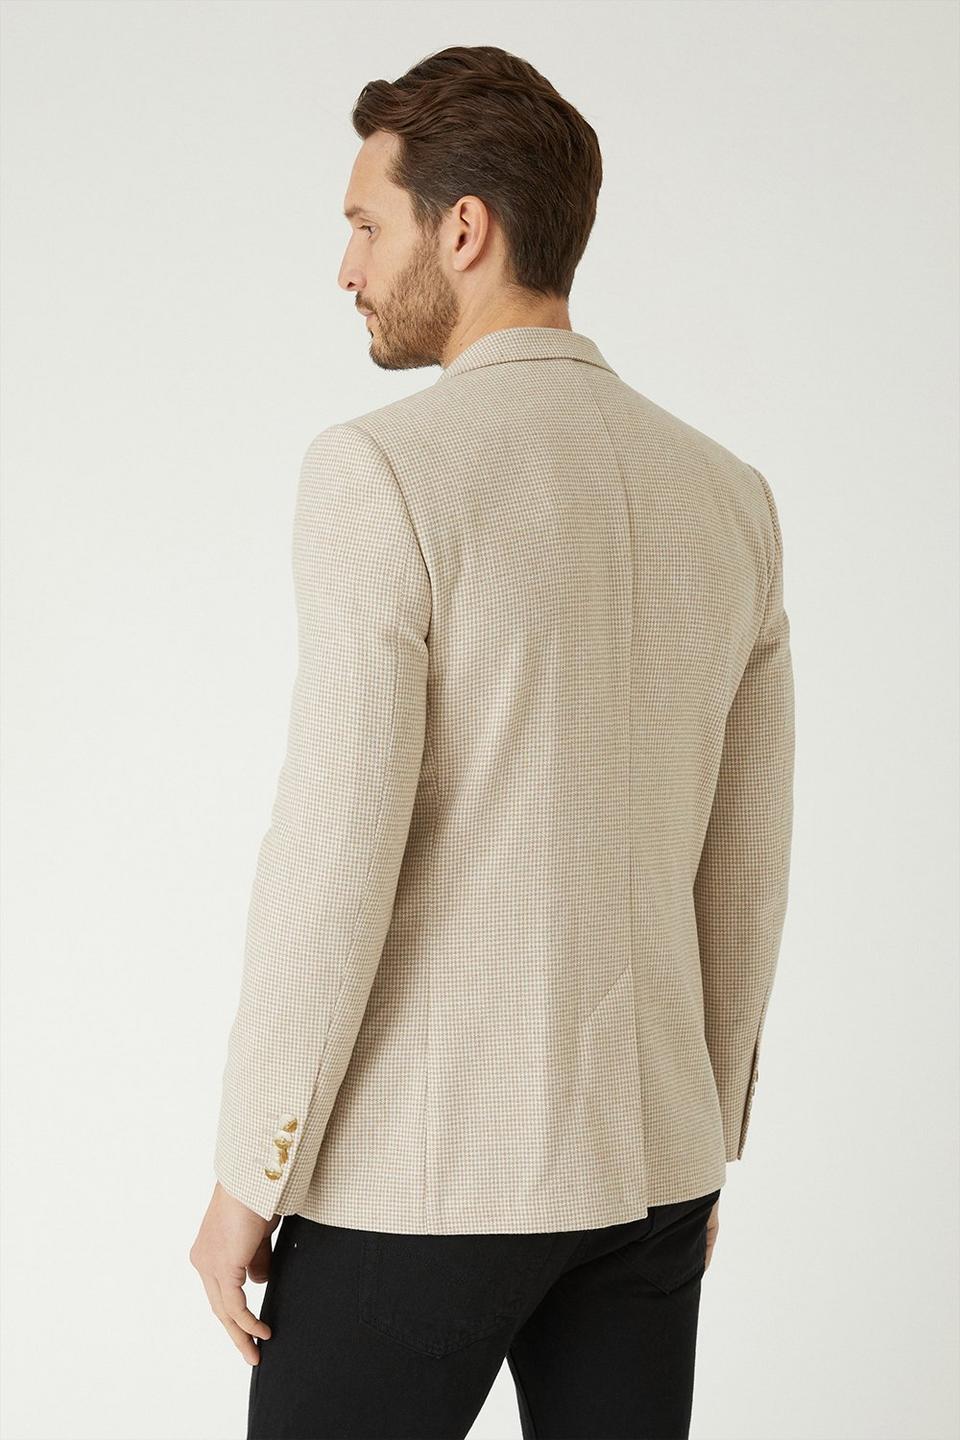 Suits | Slim Fit Half Lined Neutral Dogtooth Blazer | Burton